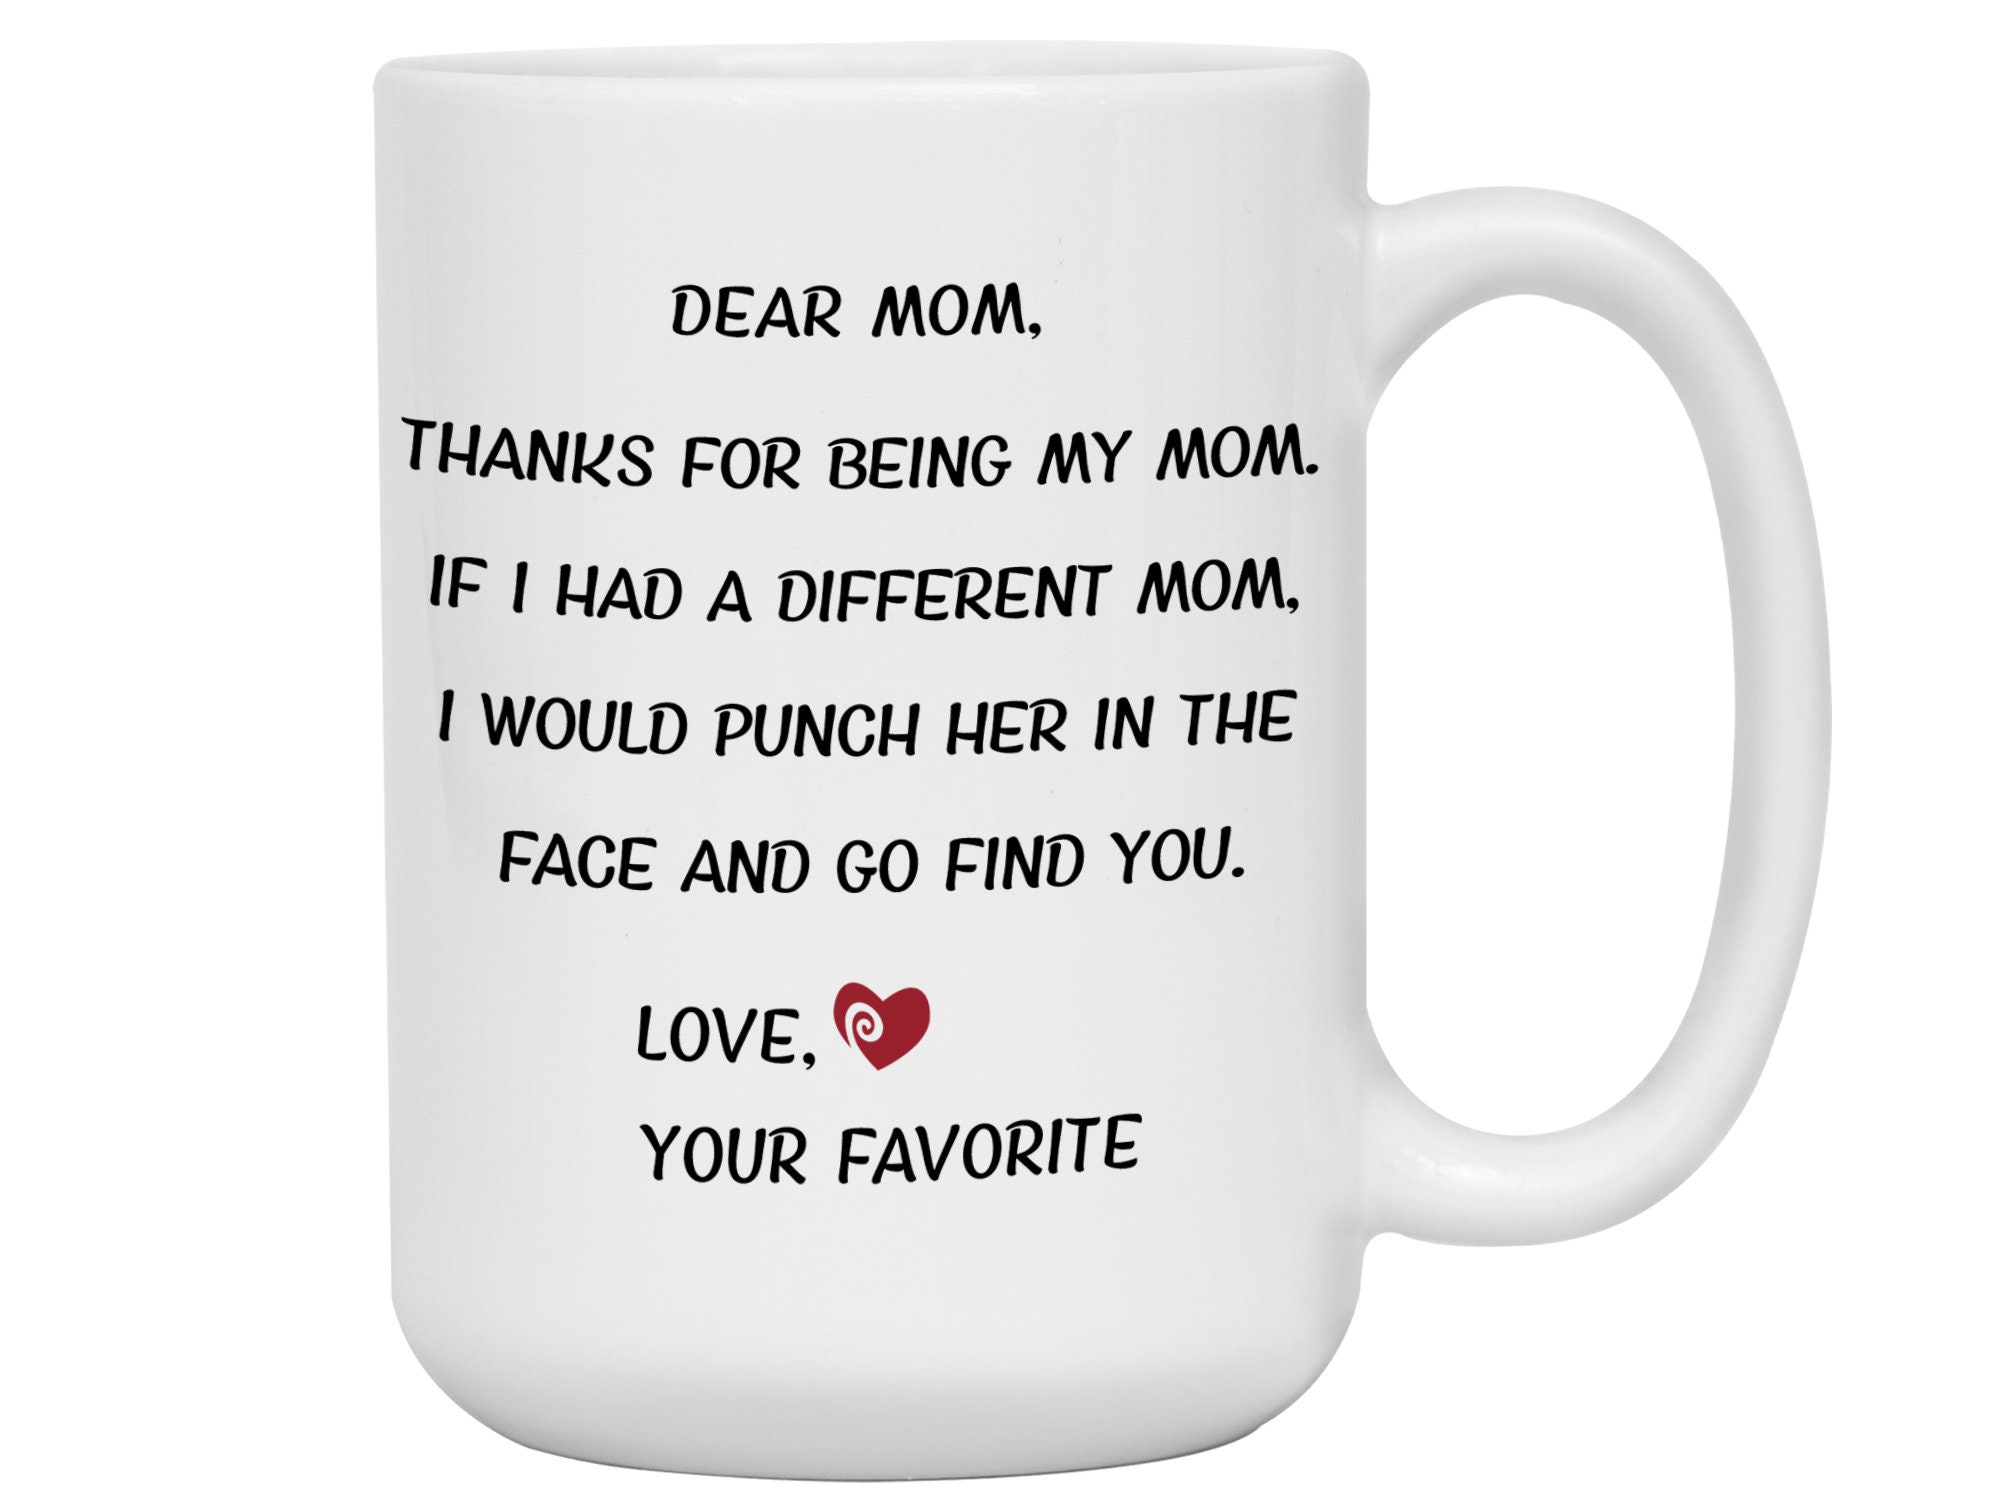 Nerd Mama Mug _ Nerd Mom _ Gift for Mom _ Funny Gift for Mom _ Mama Gift _ Bookworm _ Cute Coffee Mug _ Unique Mom Gift _ Mothers Day, Ceramic Novelty